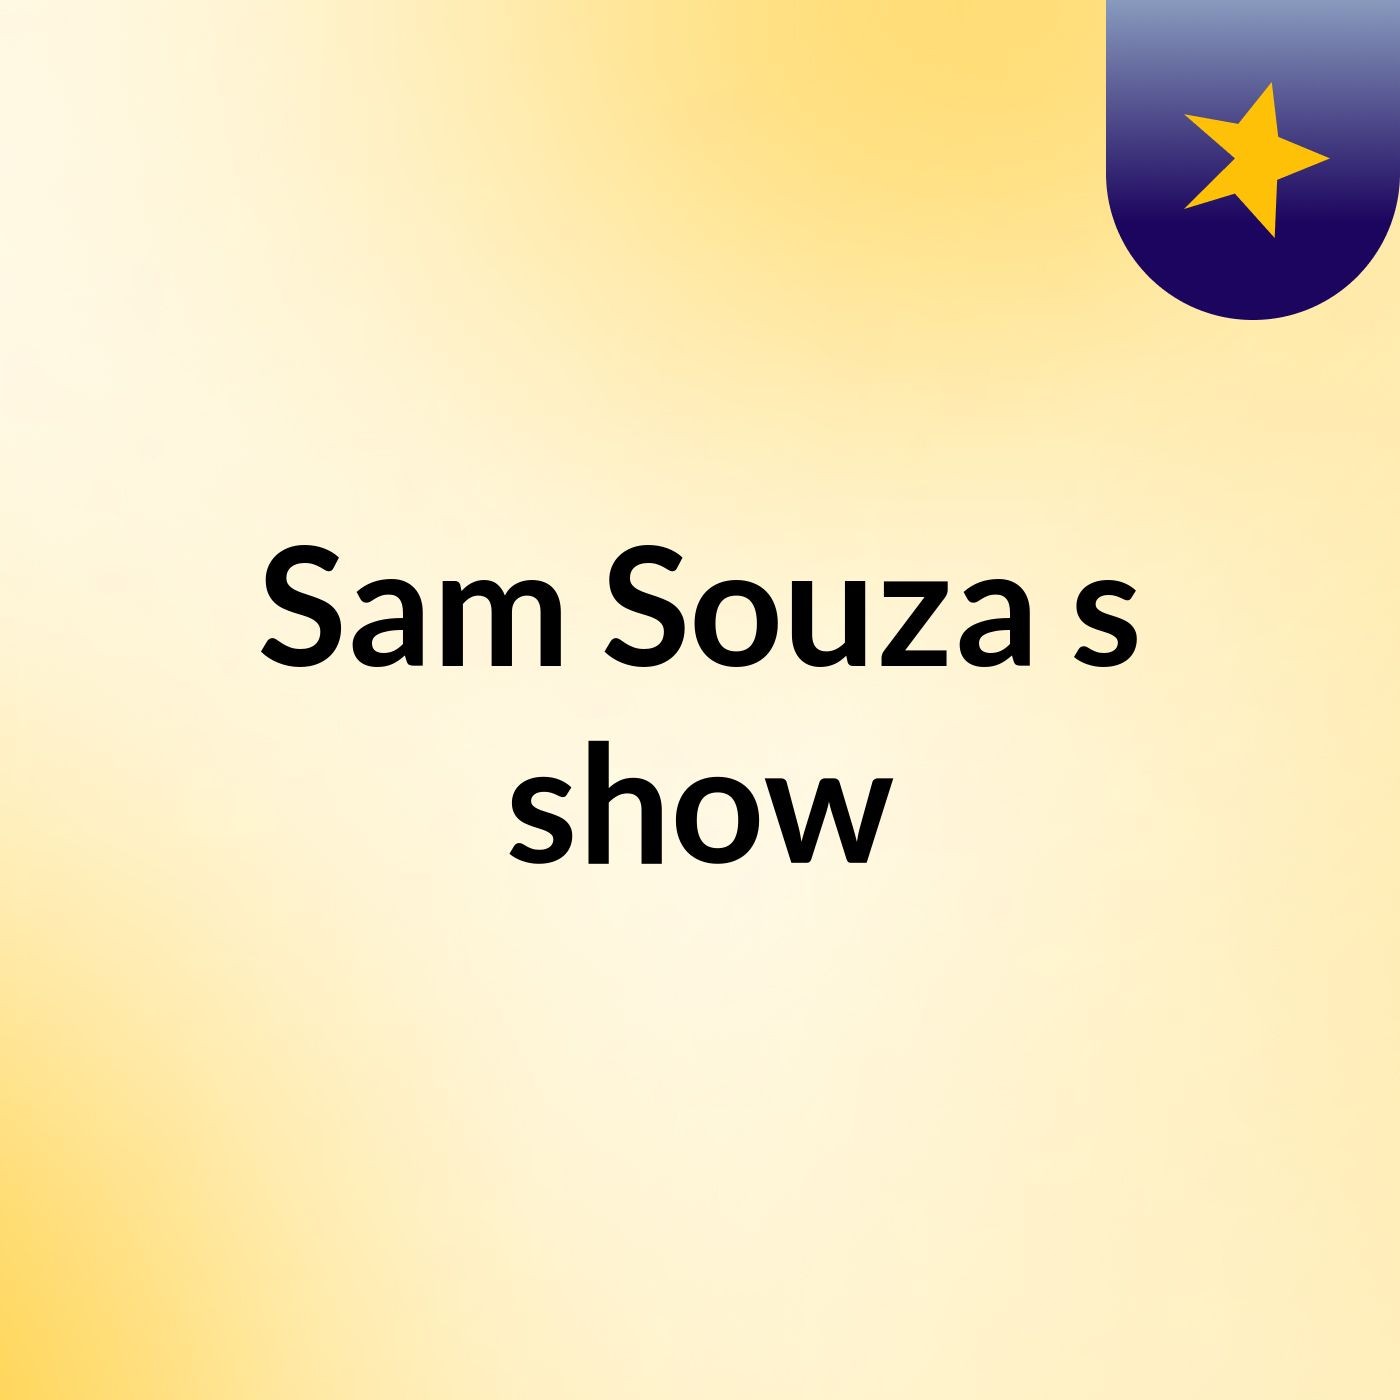 Sam Souza's show